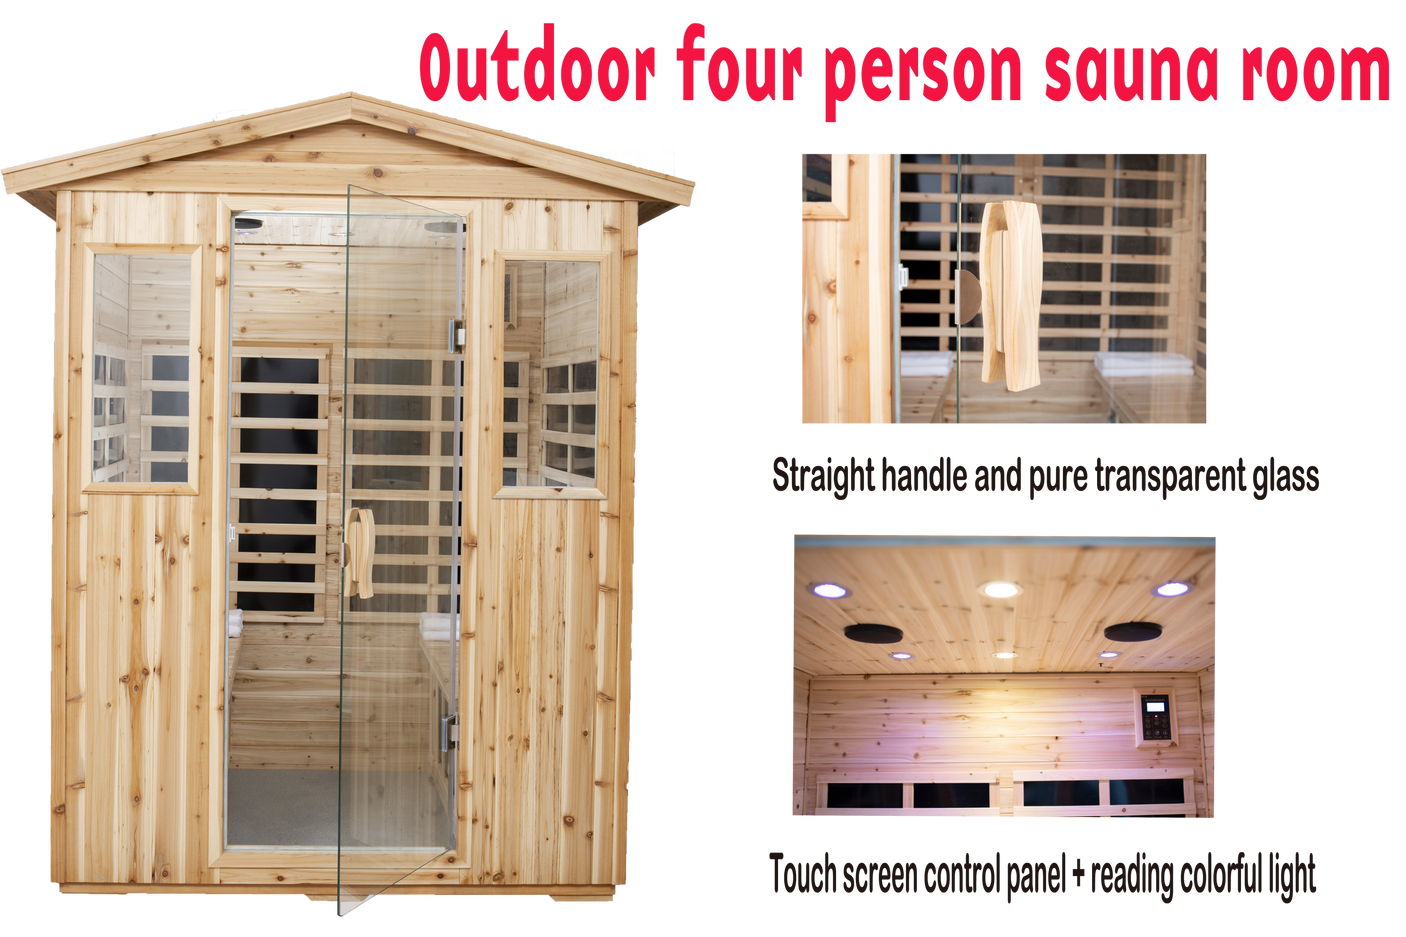 Outdoor four person sauna room